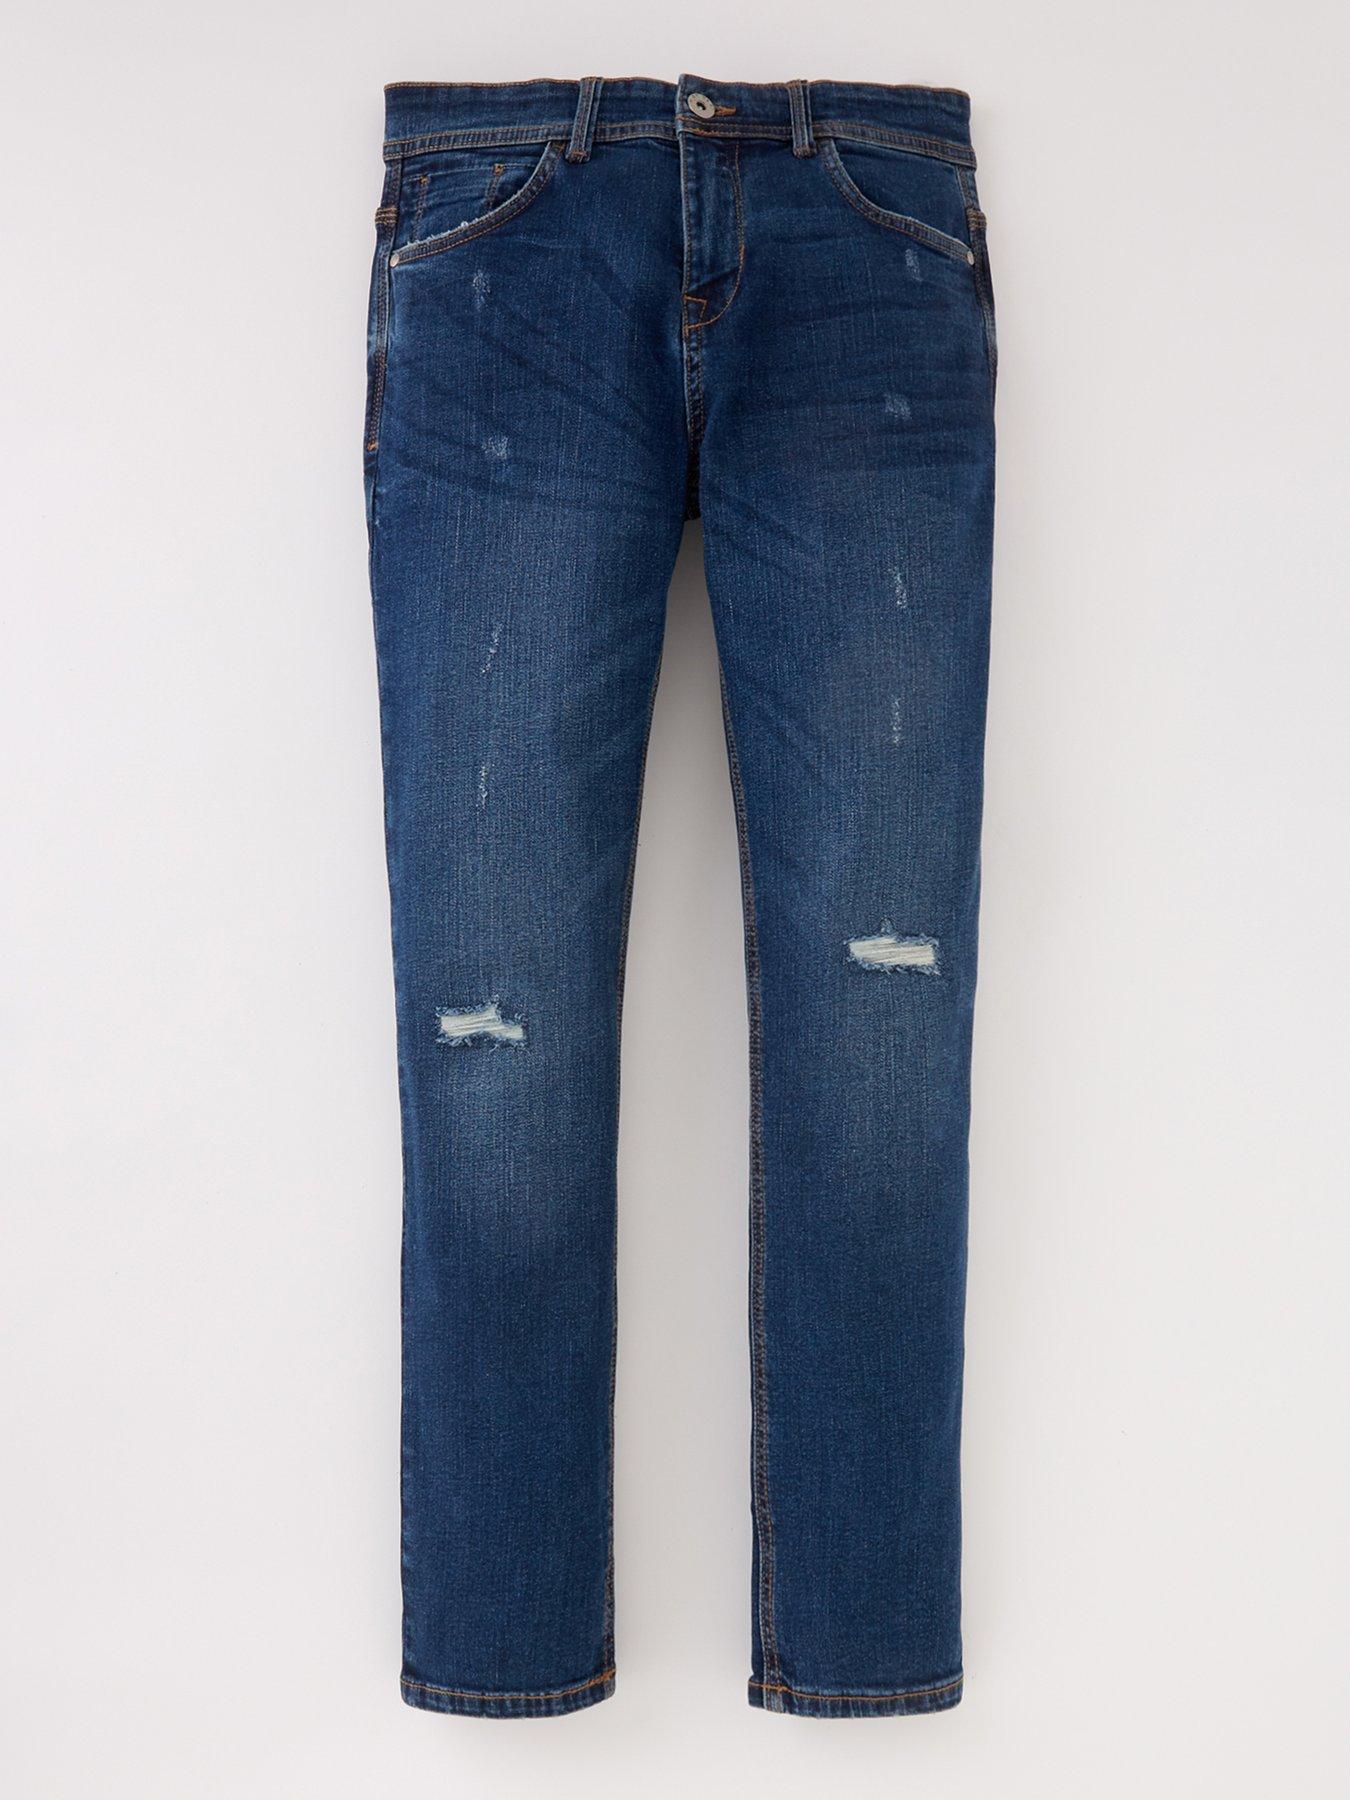 Boys Kids Next Vintage Distressed Regular Denim Elastic Waist Jeans Age 3-16 